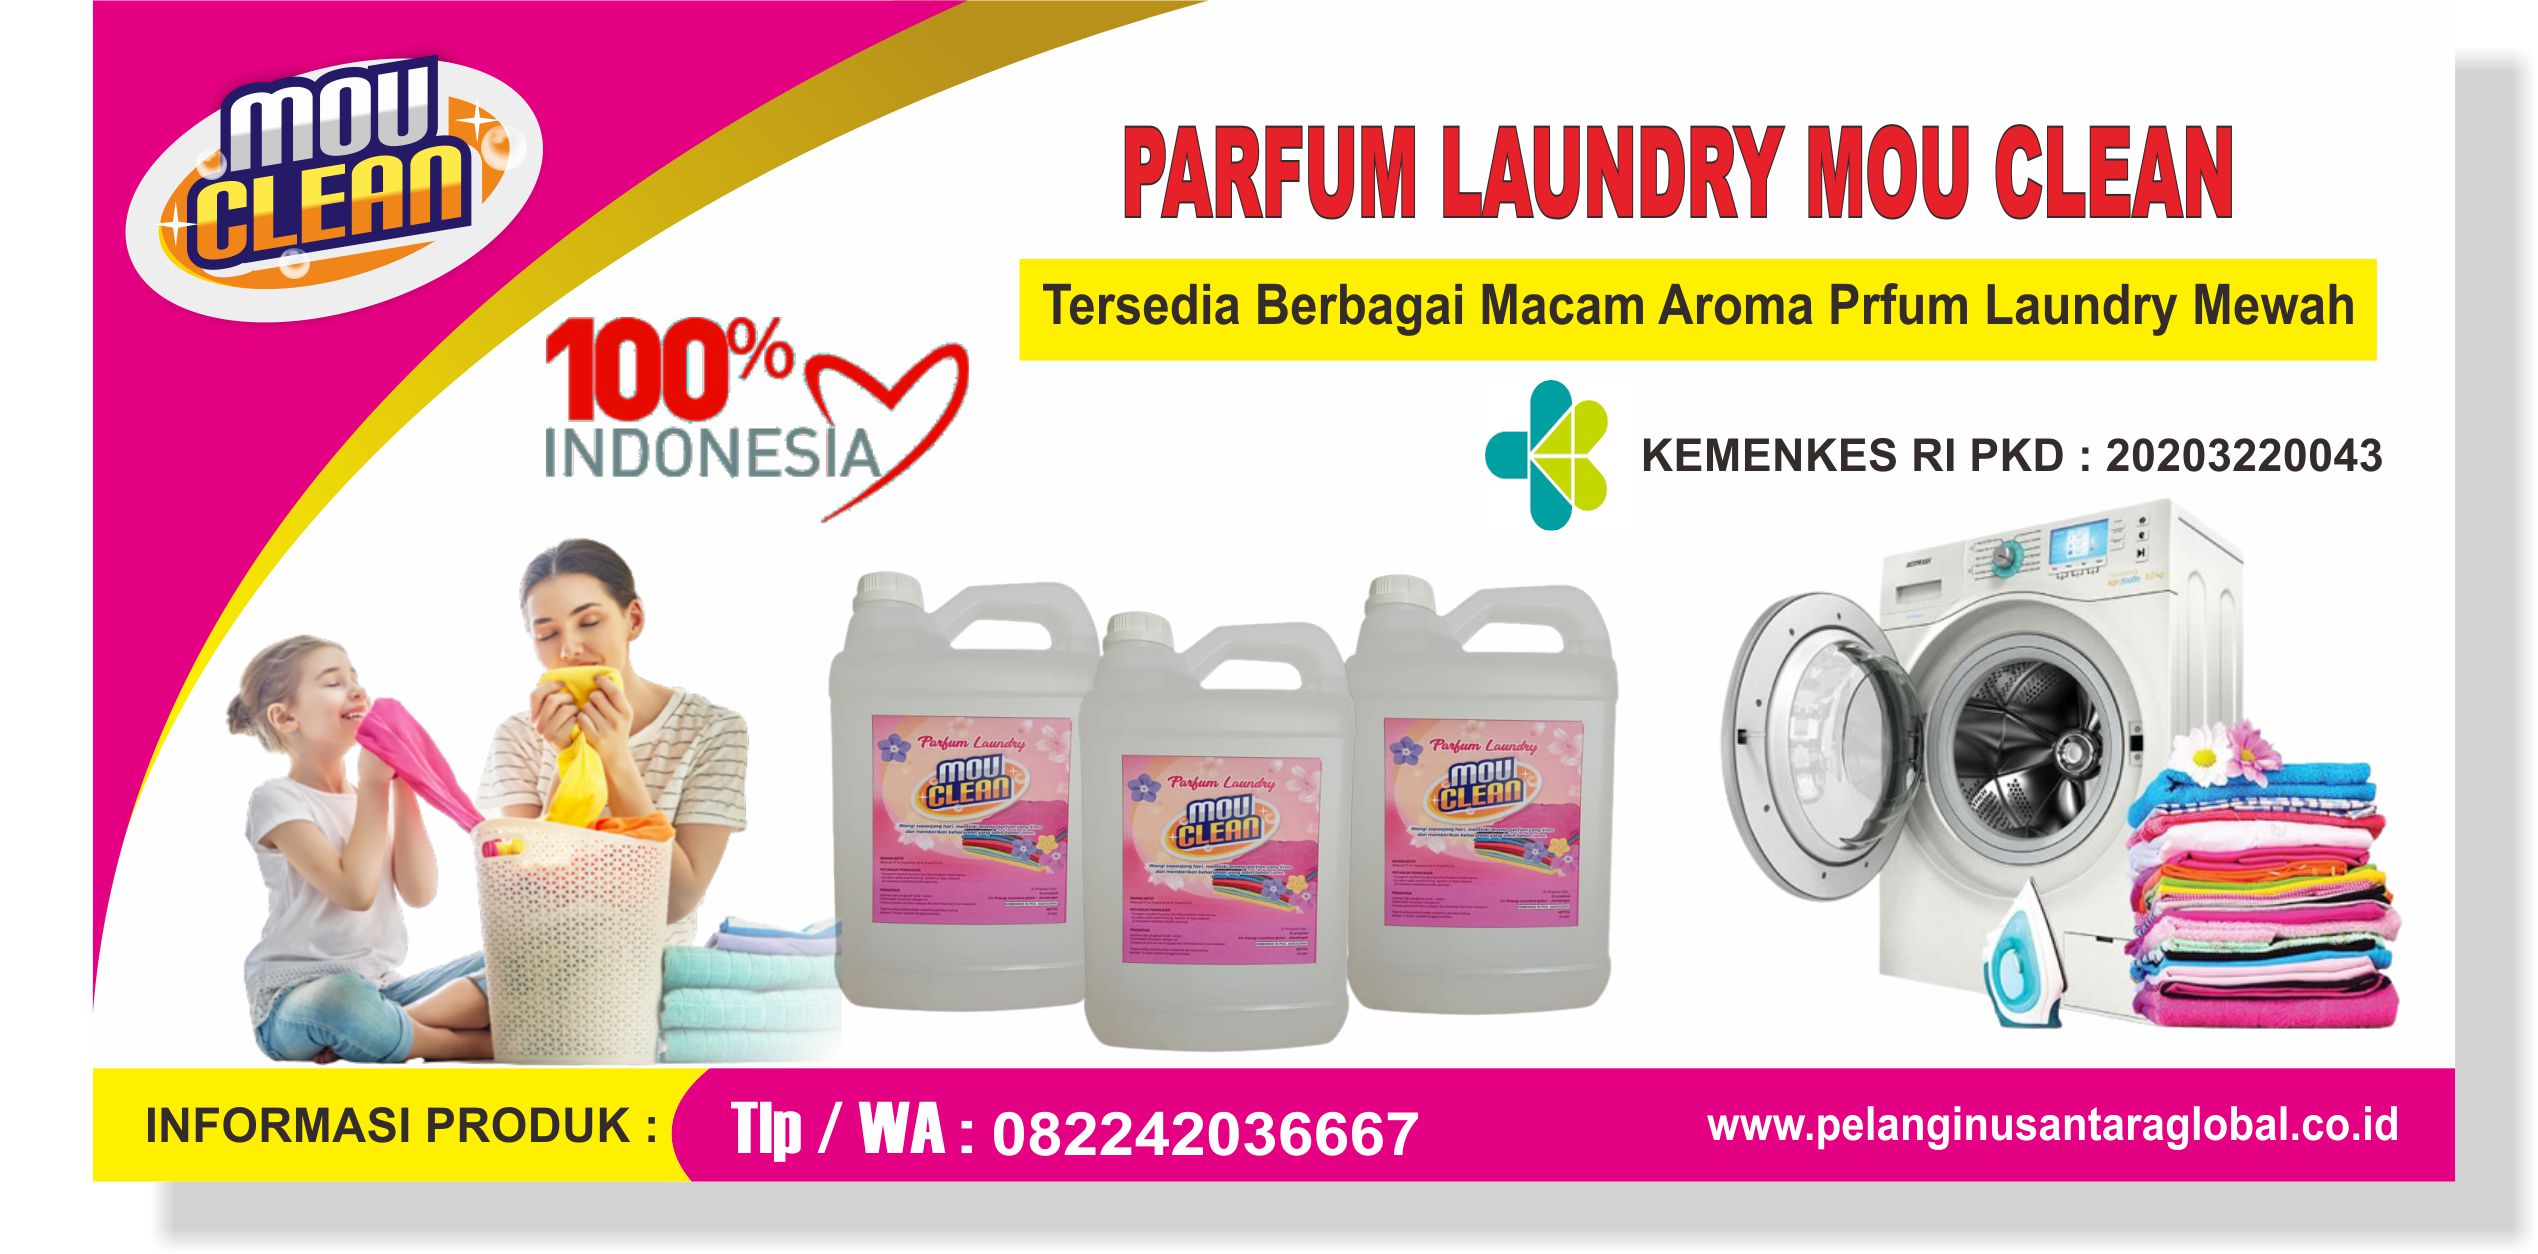 Pusat  Parfum Laundry Terbaik Di Palembang